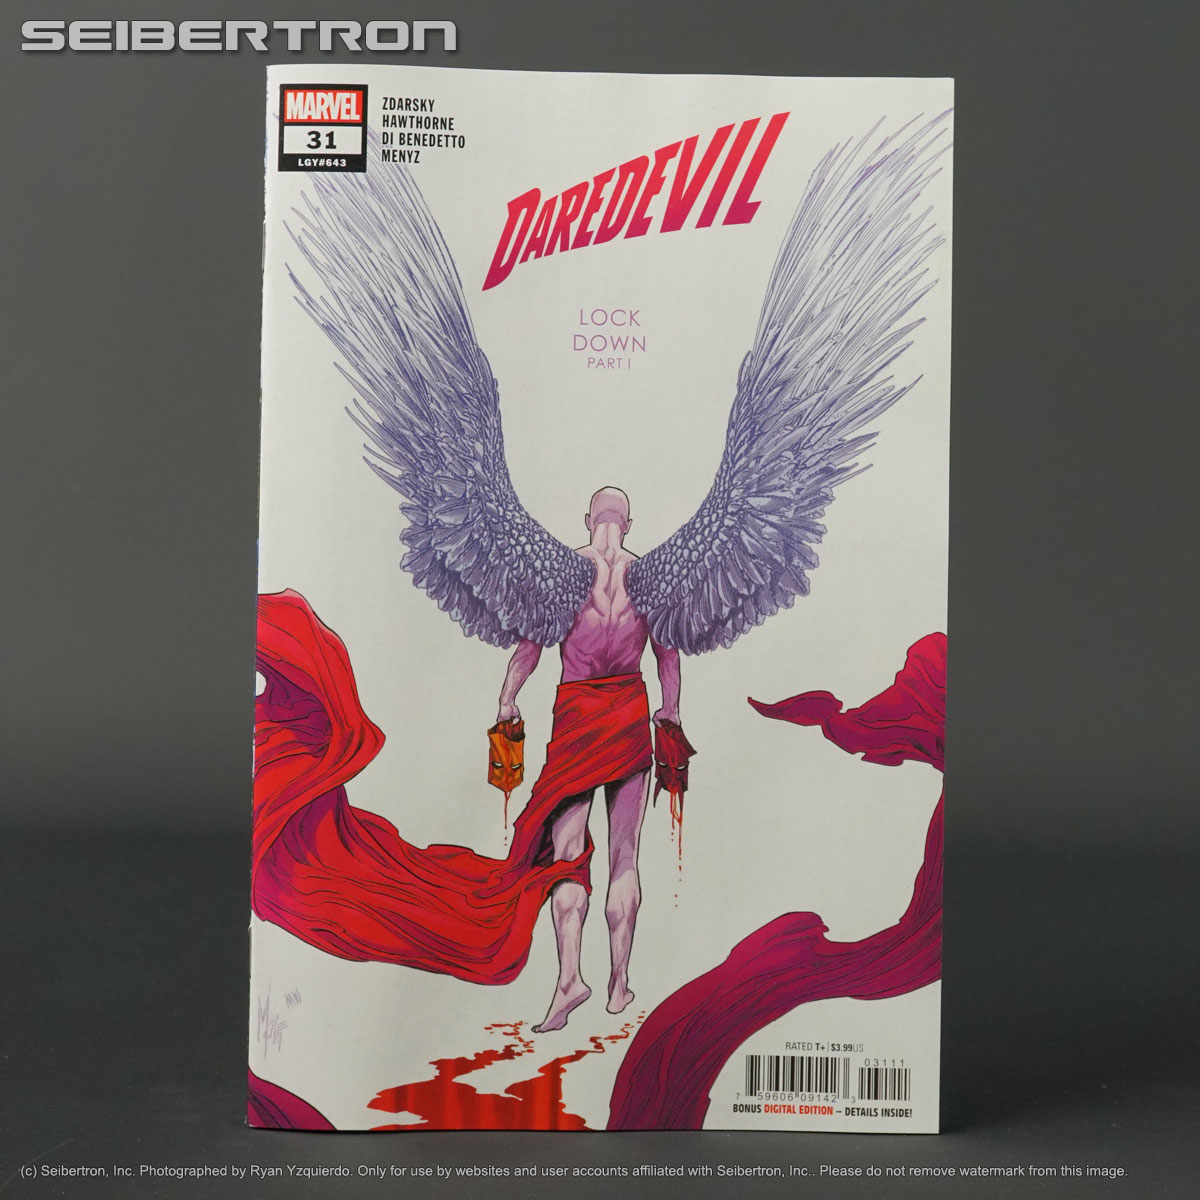 DAREDEVIL #31 Marvel Comics 2021 APR210937 (W) Zdarsky (CA) Checchetto